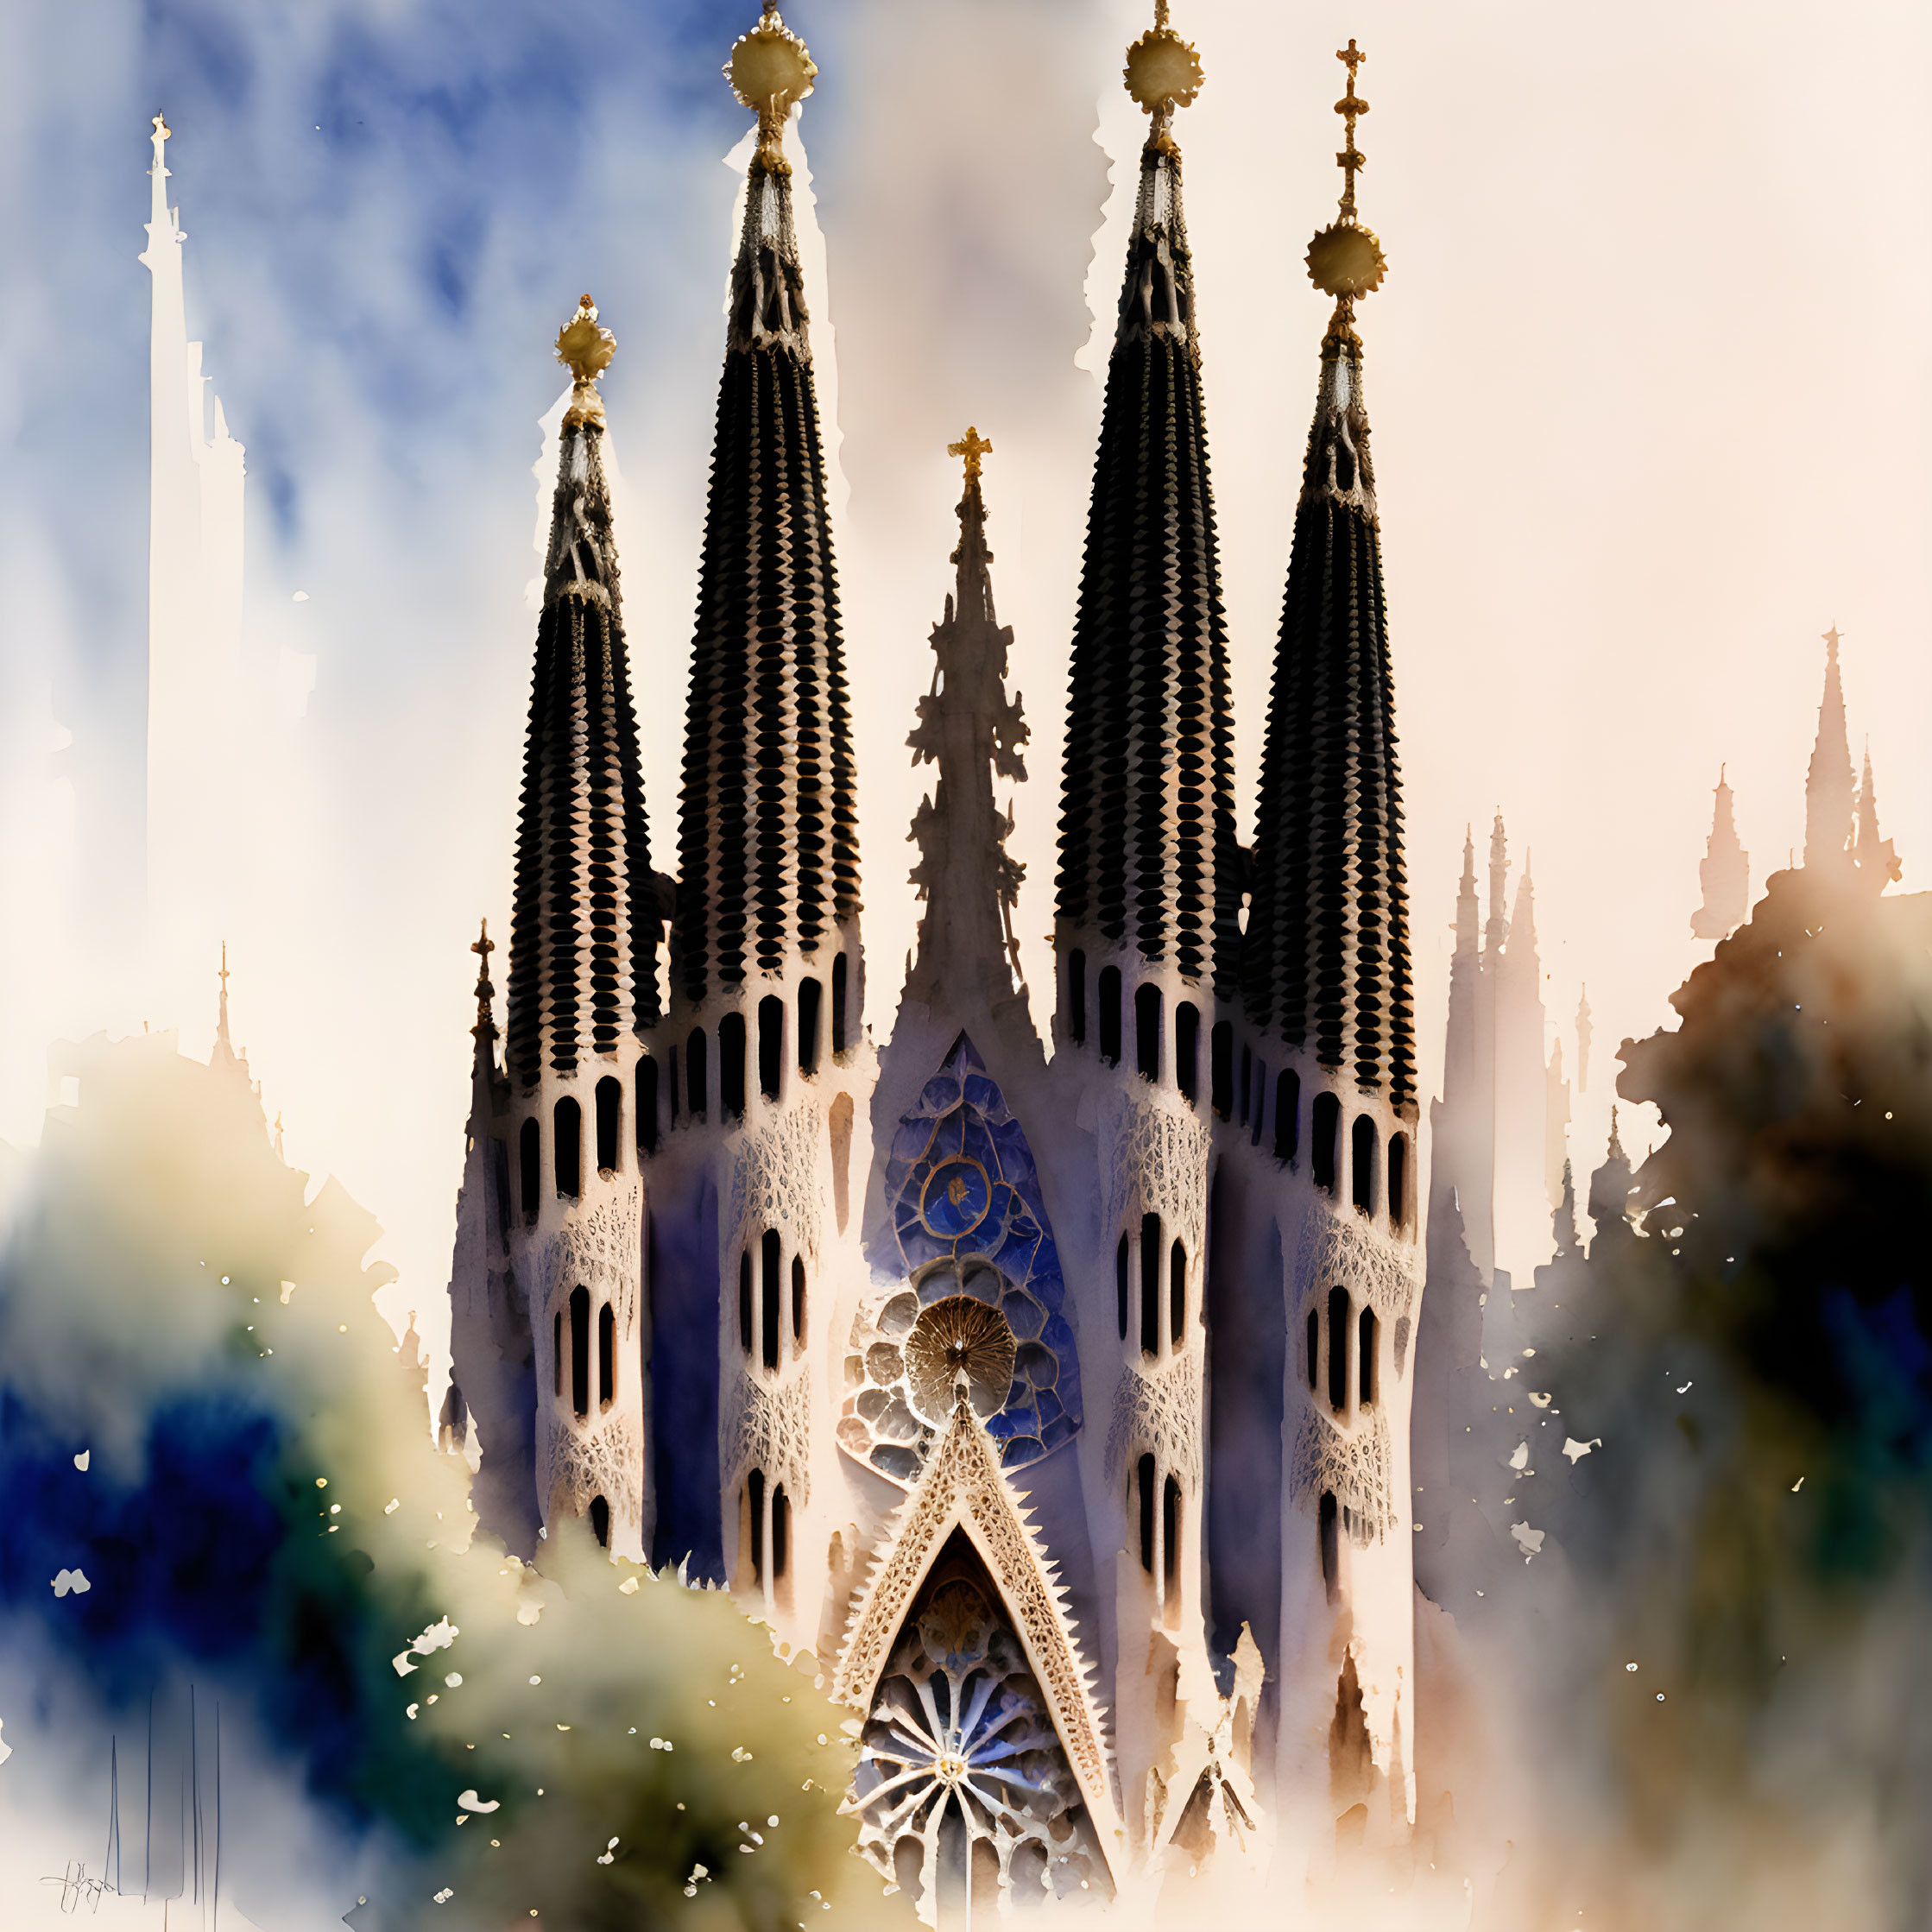 Misty clouds surround Sagrada Familia in warm color palette